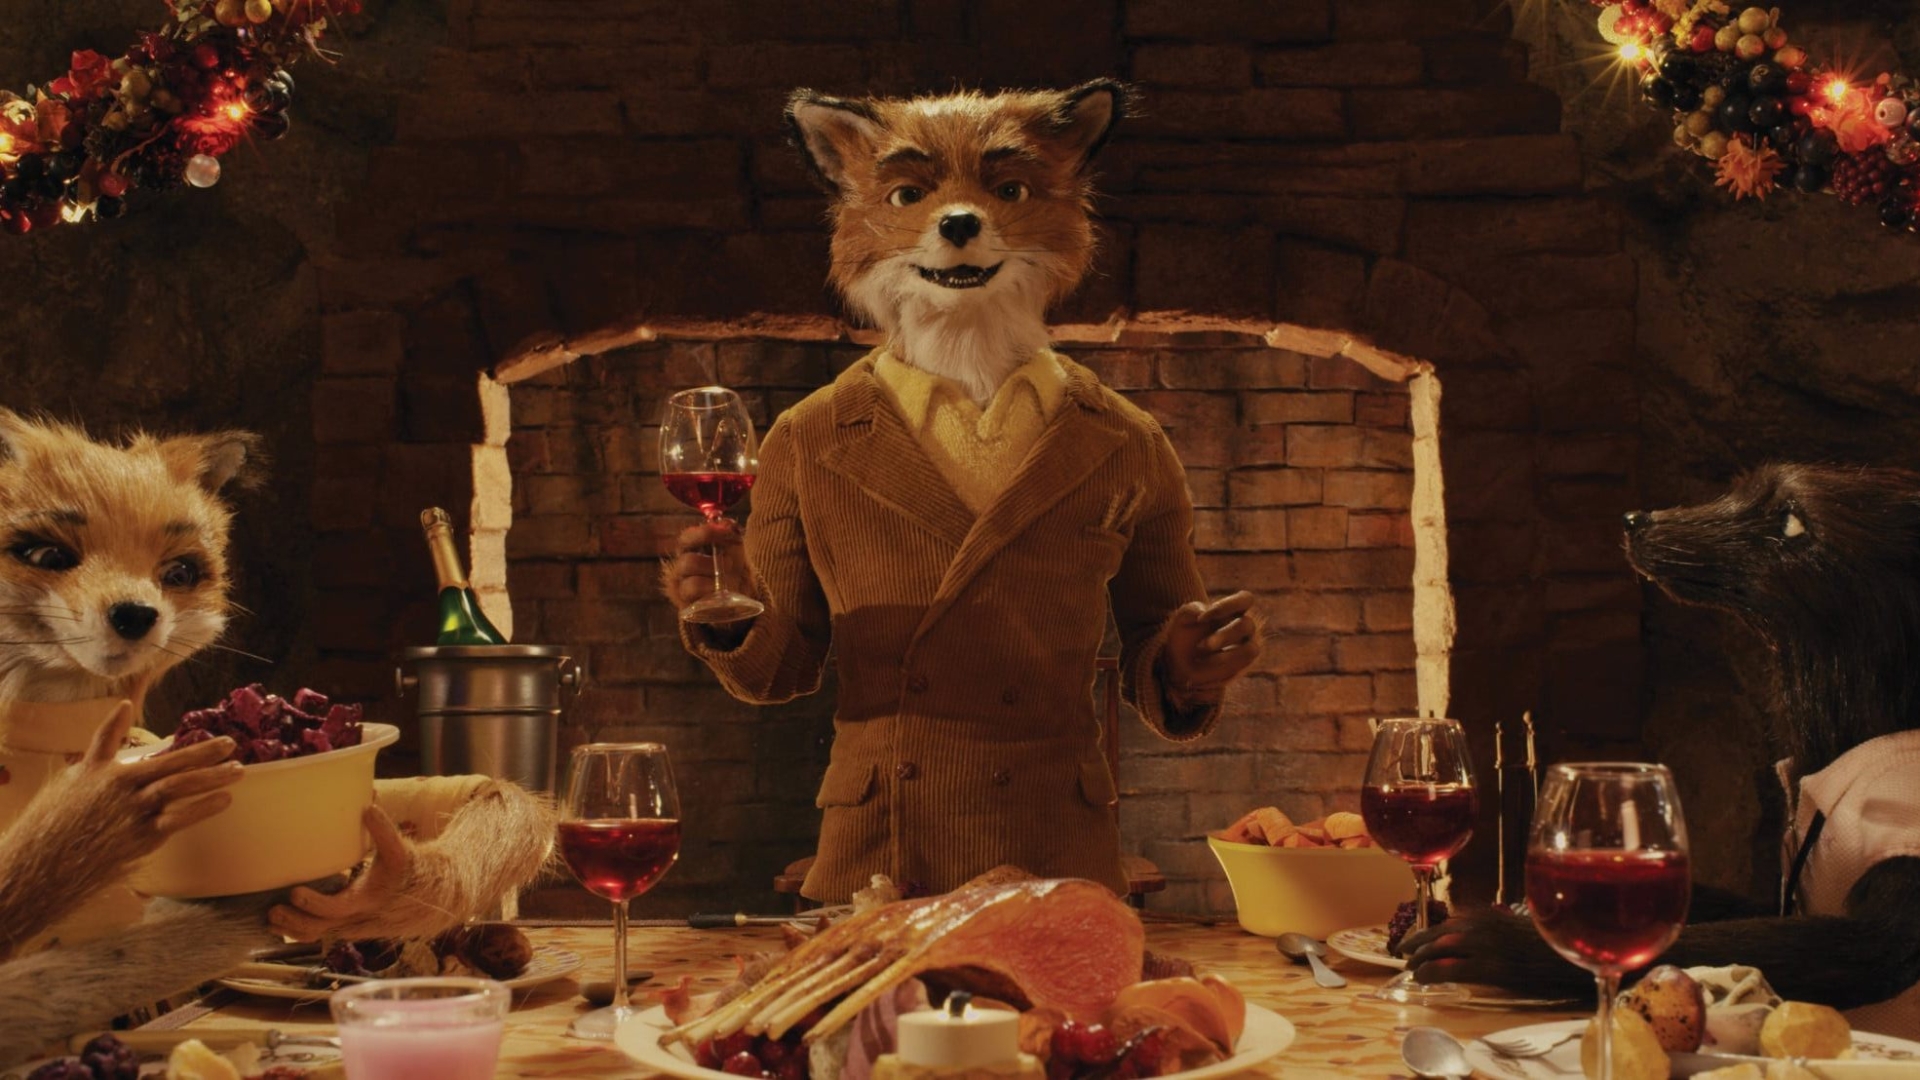 Fantastic Mr. Fox (Fantastic Mr. Fox)